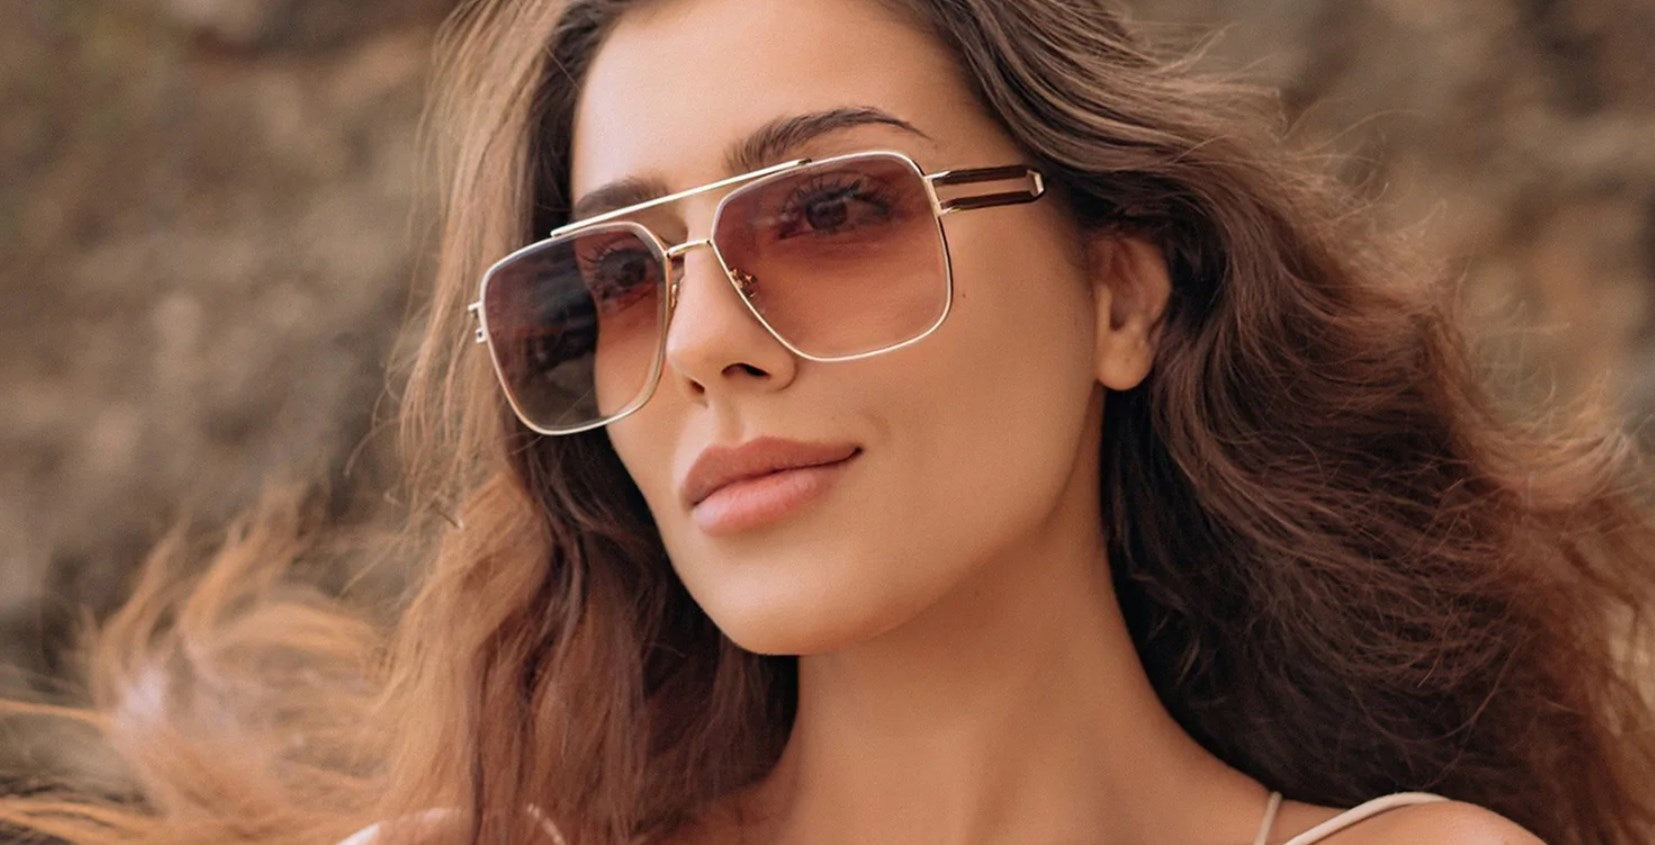 Buy PASTL Sunglasses Unisex Oval Metal Frame Spring Hinge UV 400 Gold, Blue  Mirror at Amazon.in